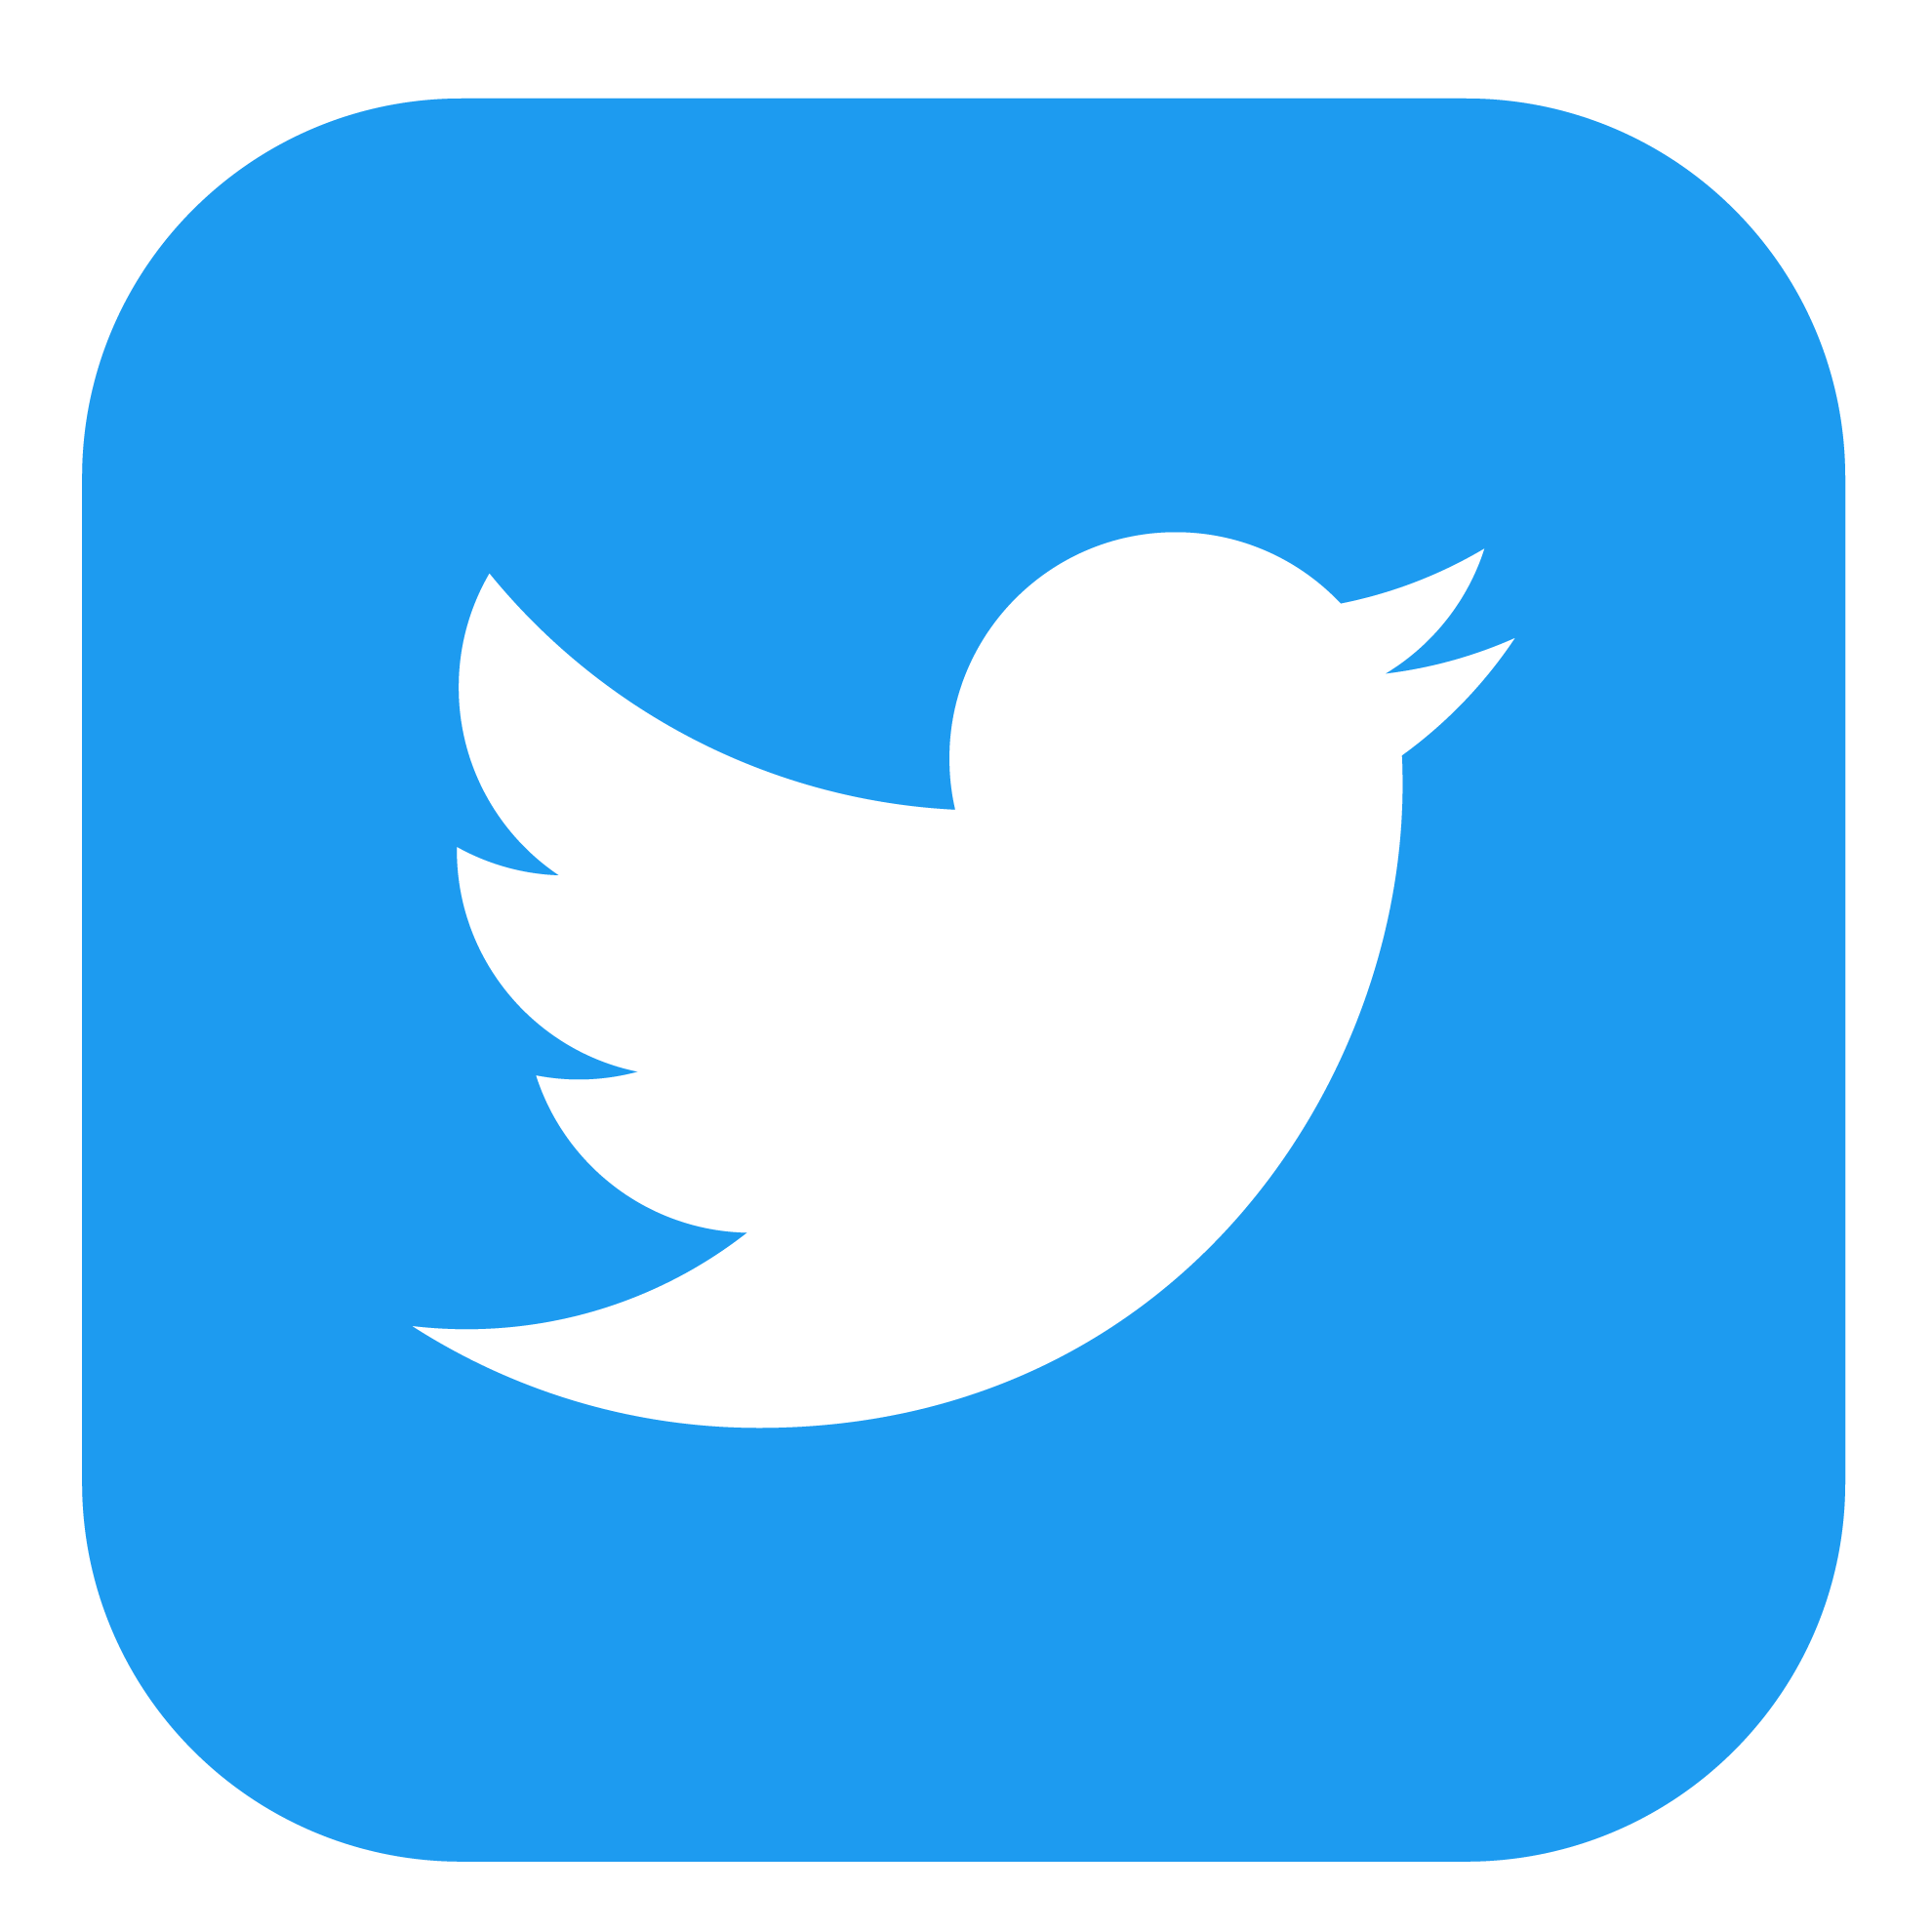 Logotipo Twitter con tu recarga celular prepago ilimitado Movistar